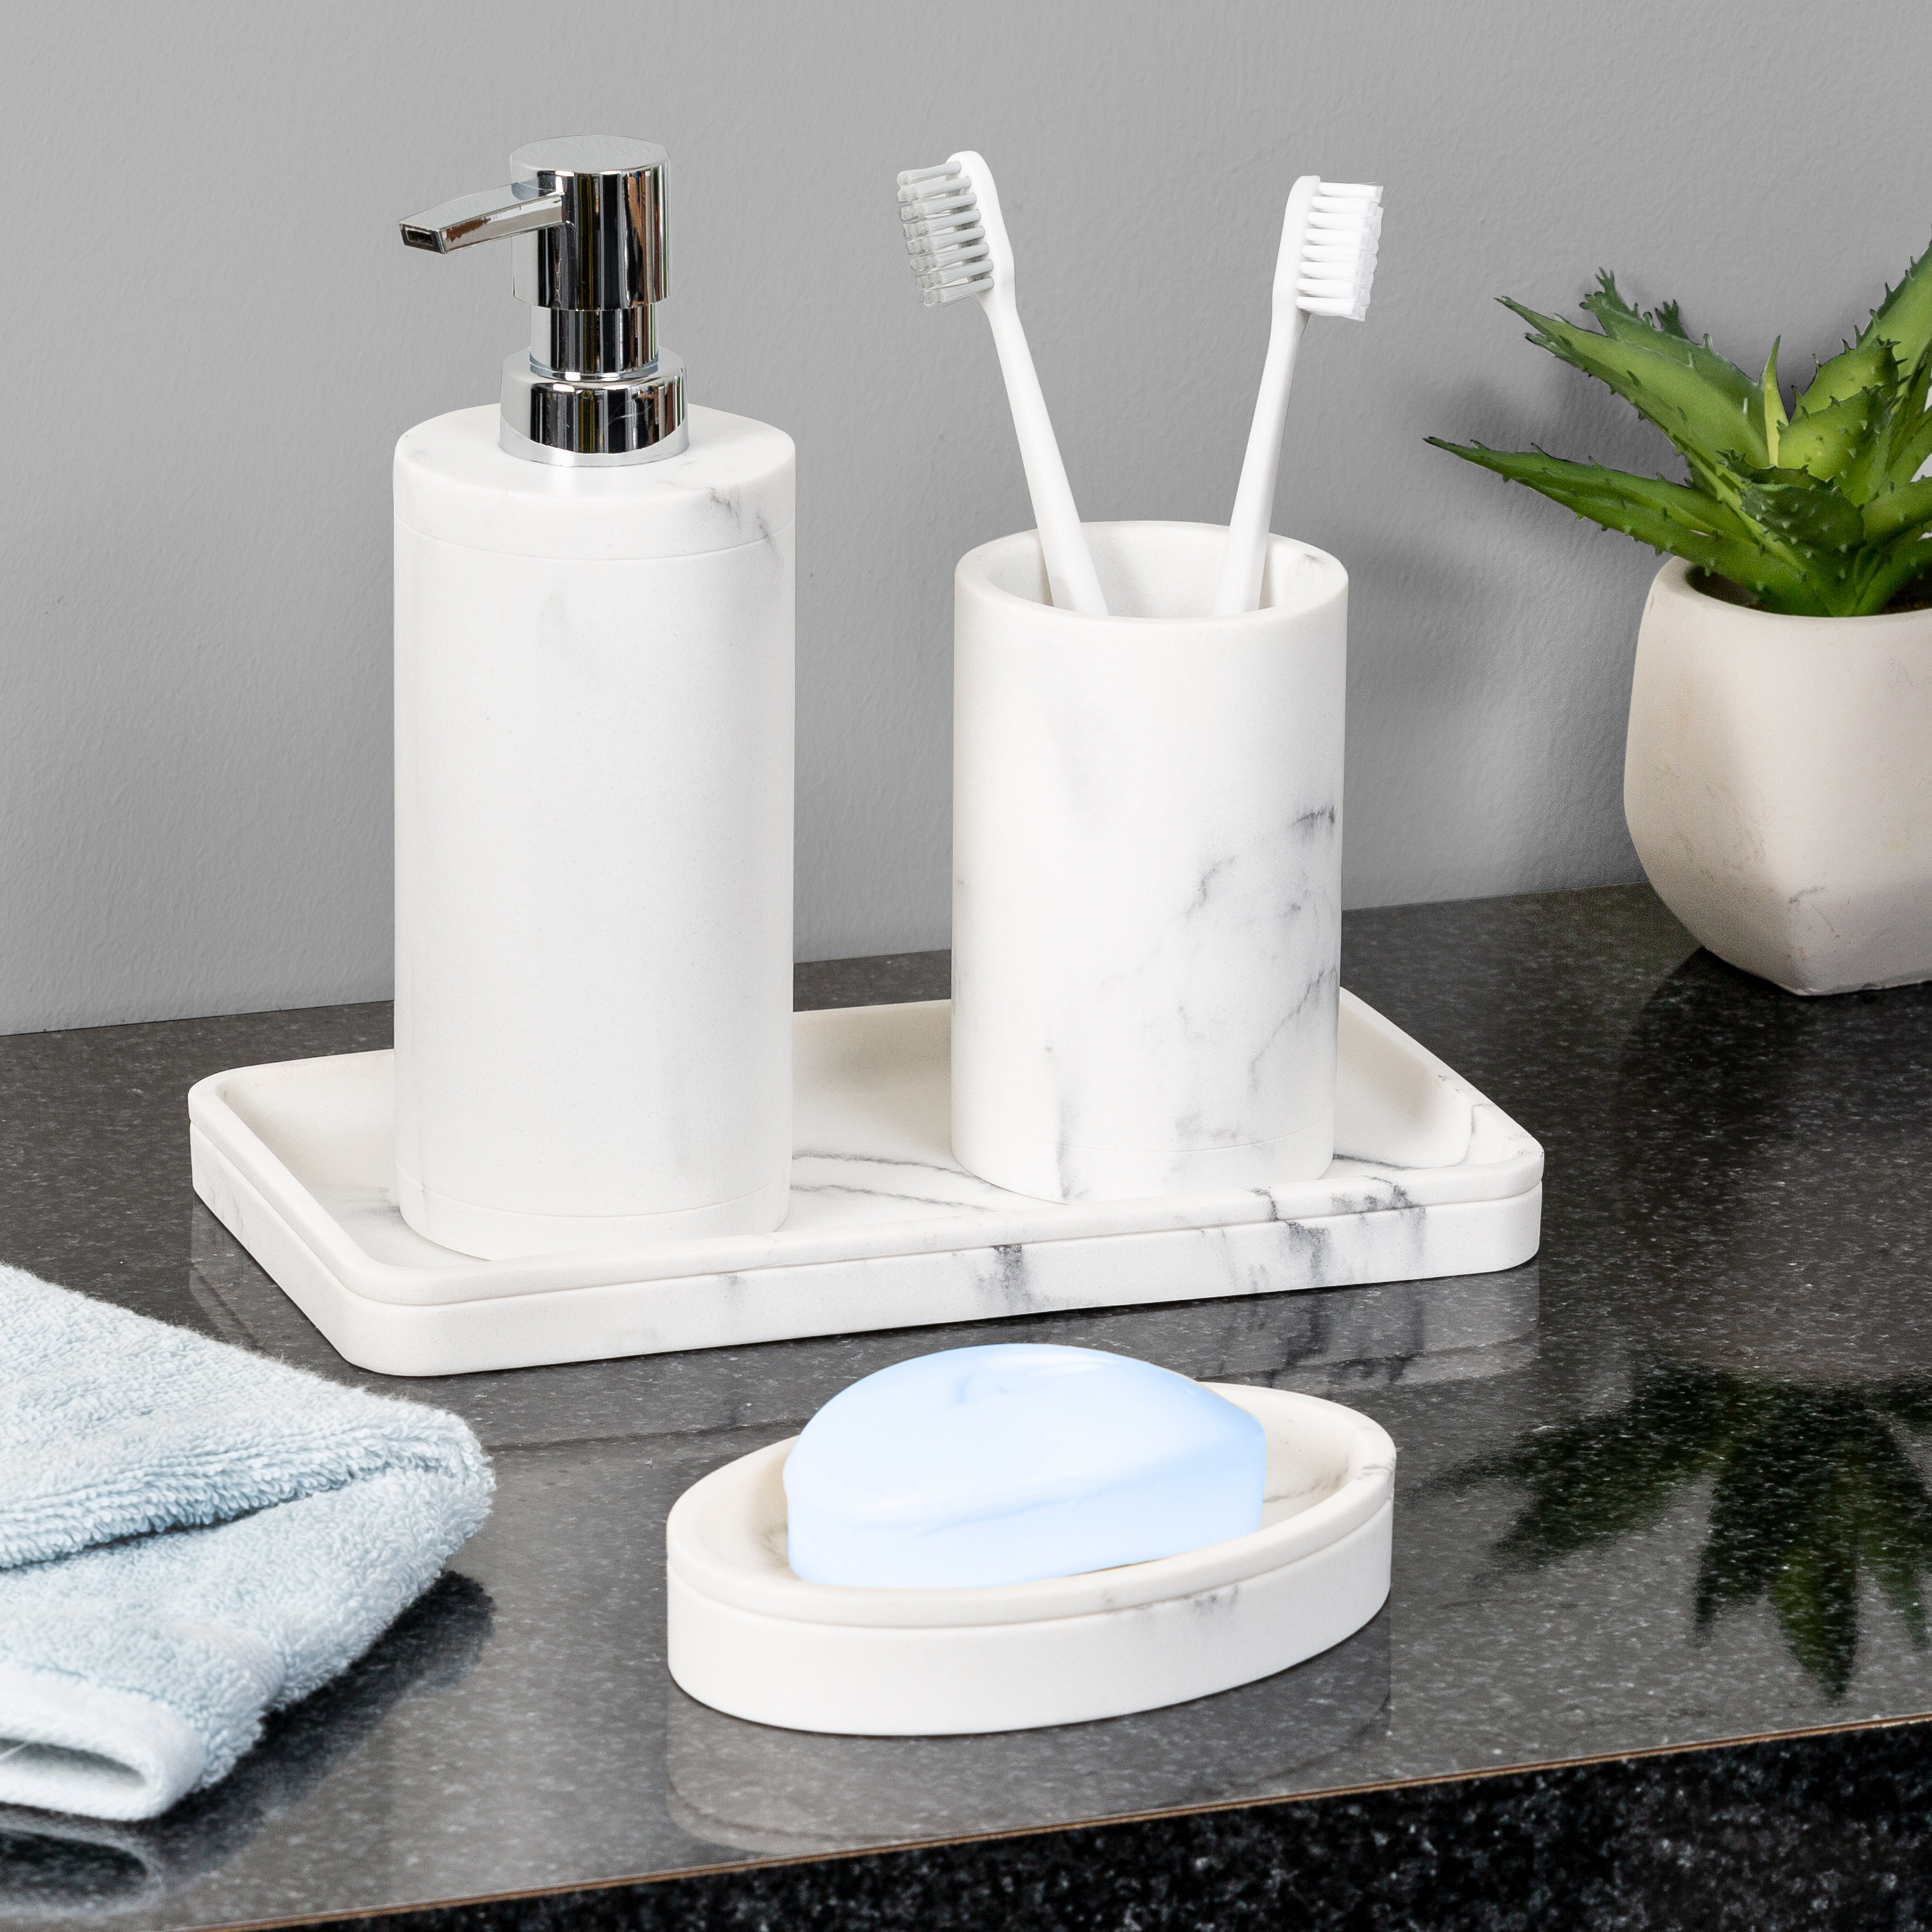 4 Piece Bathroom Accessories Set Soap Dispenser Toothbrush Holder Dish